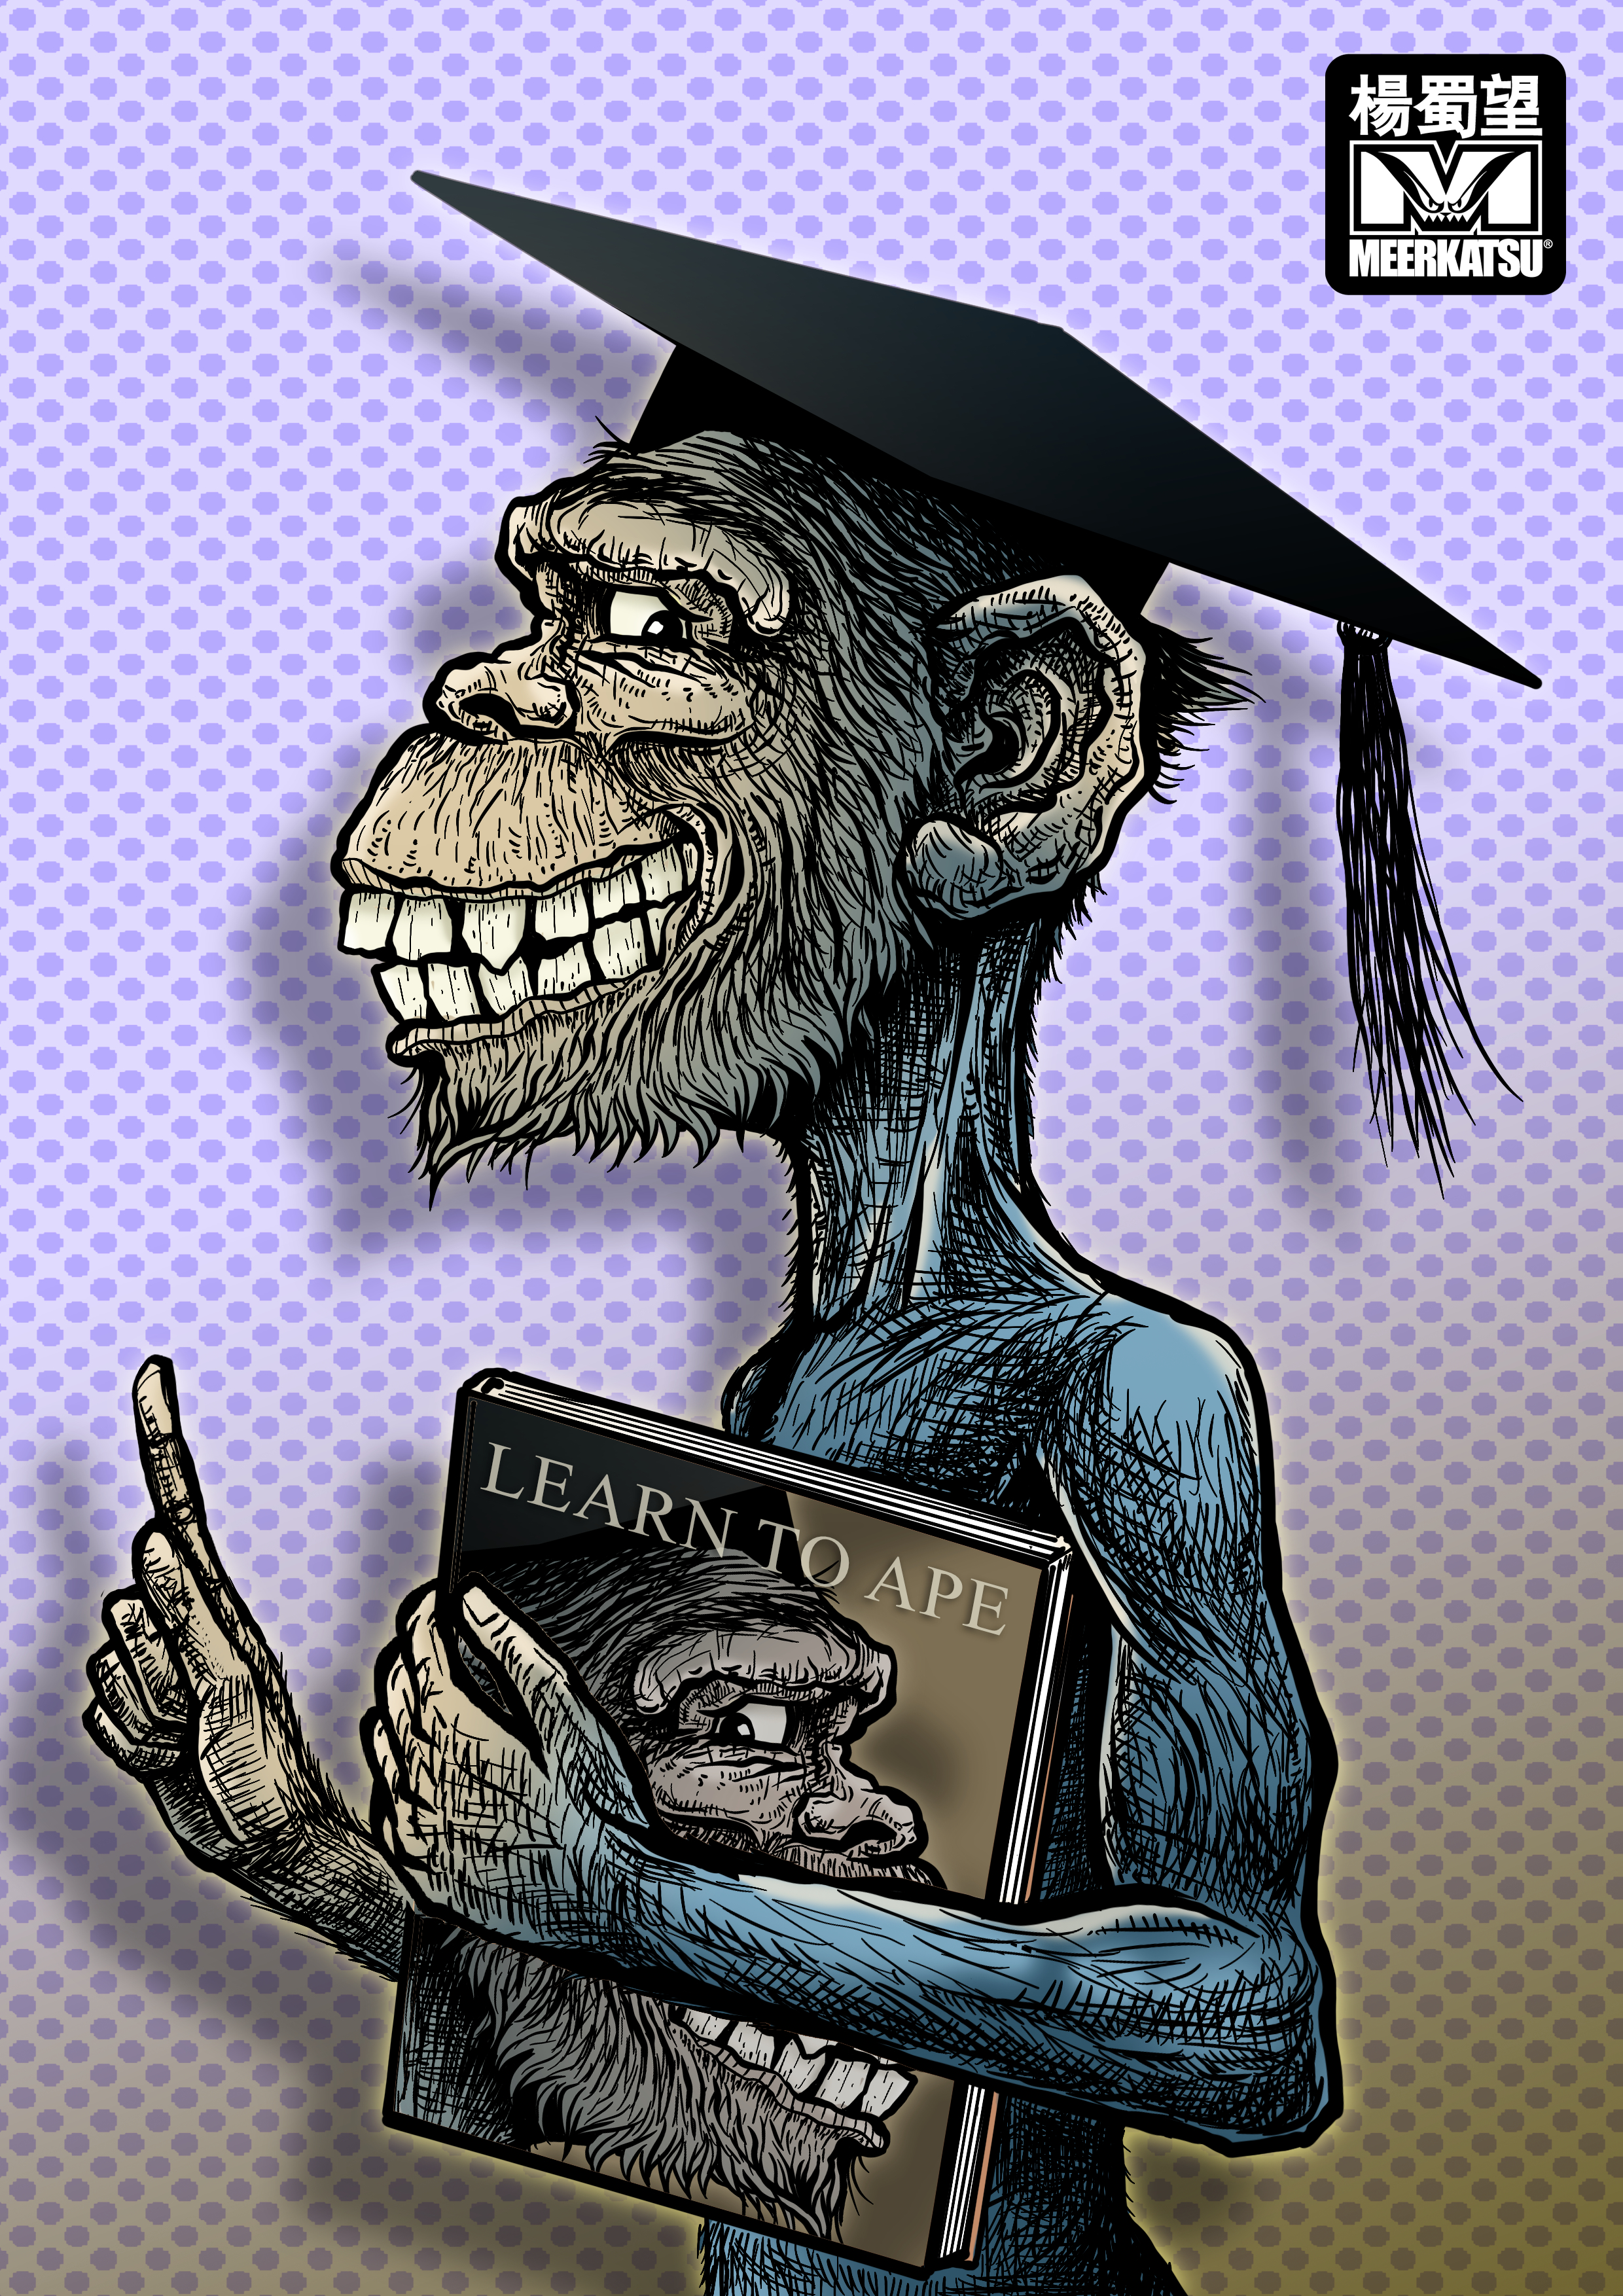 Scholar Chimp 2